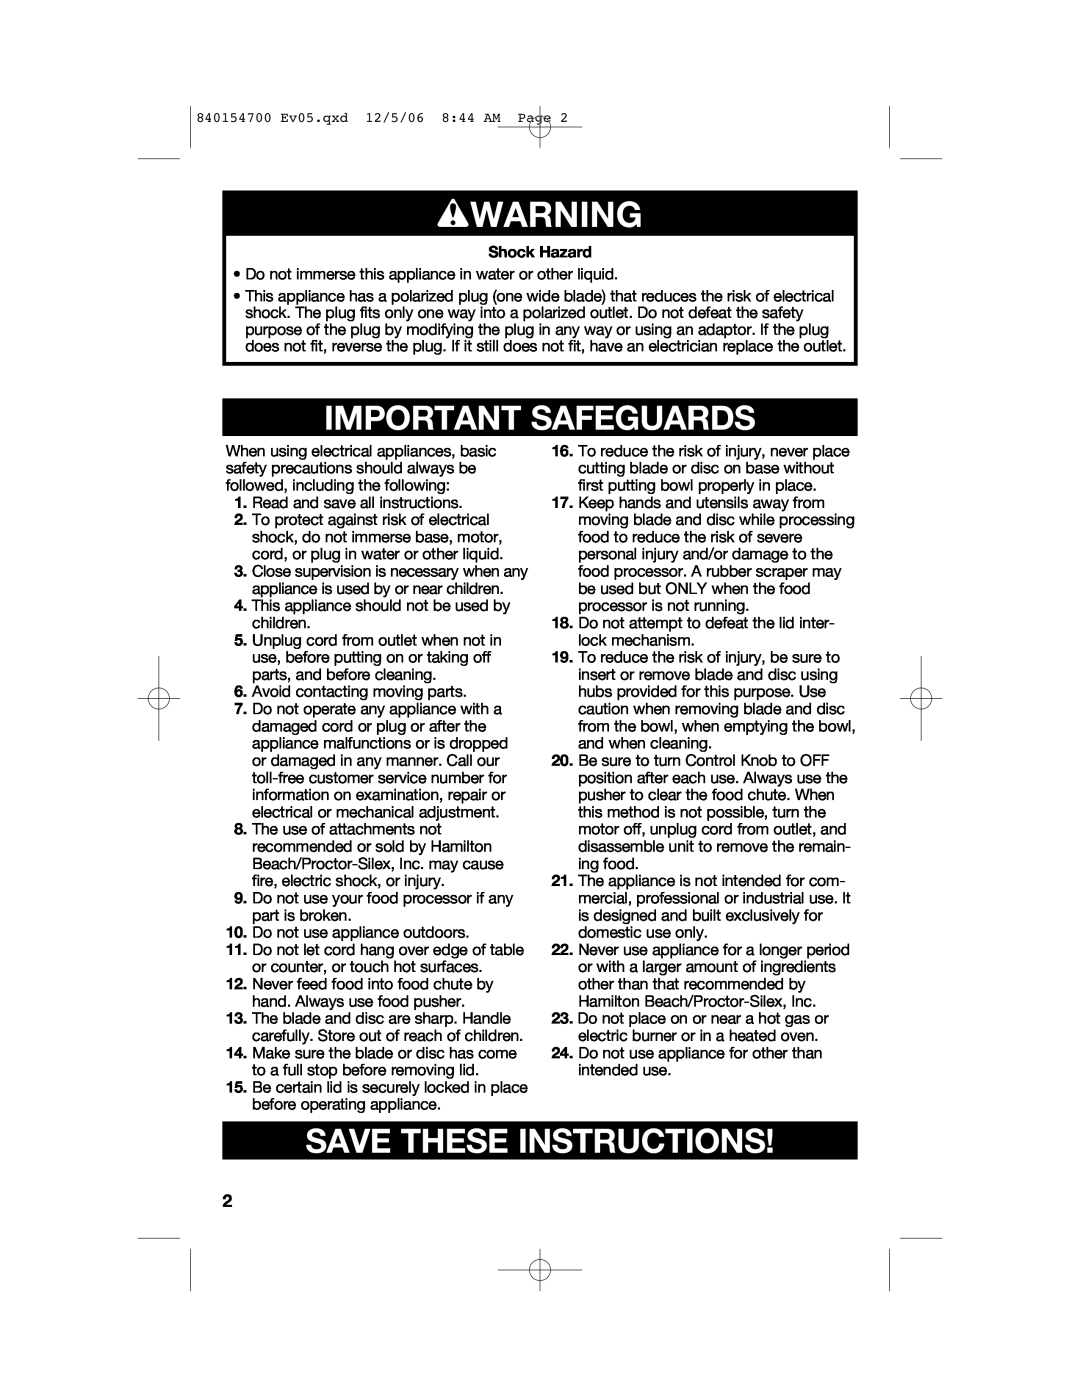 Hamilton Beach 70610C manual wWARNING, Important Safeguards, Save These Instructions, Shock Hazard 